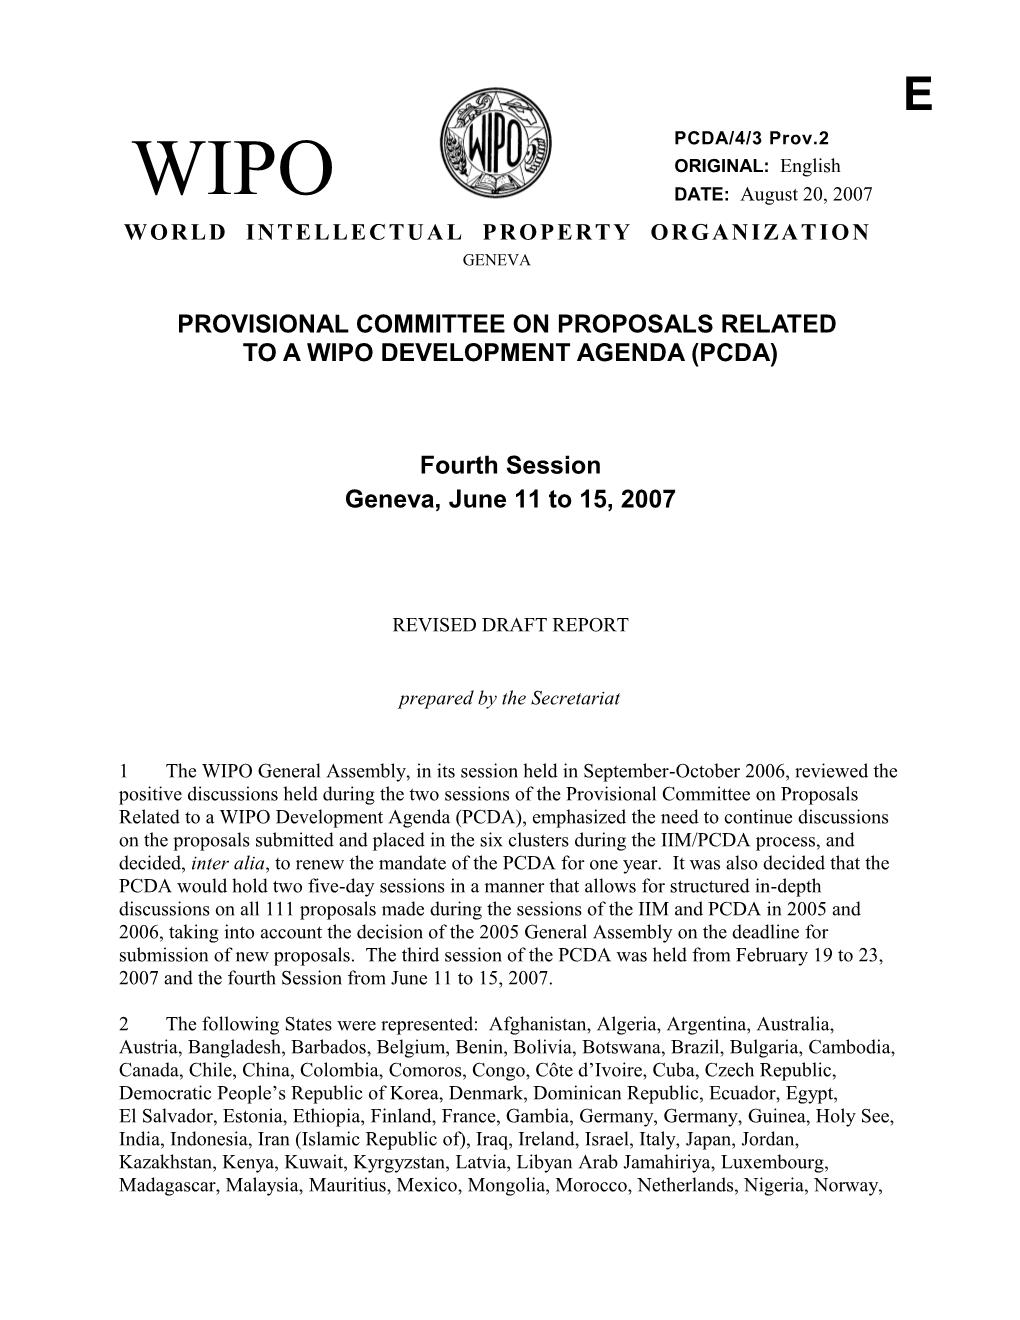 PCDA/4/3 PROV.2: Revised Draft Report